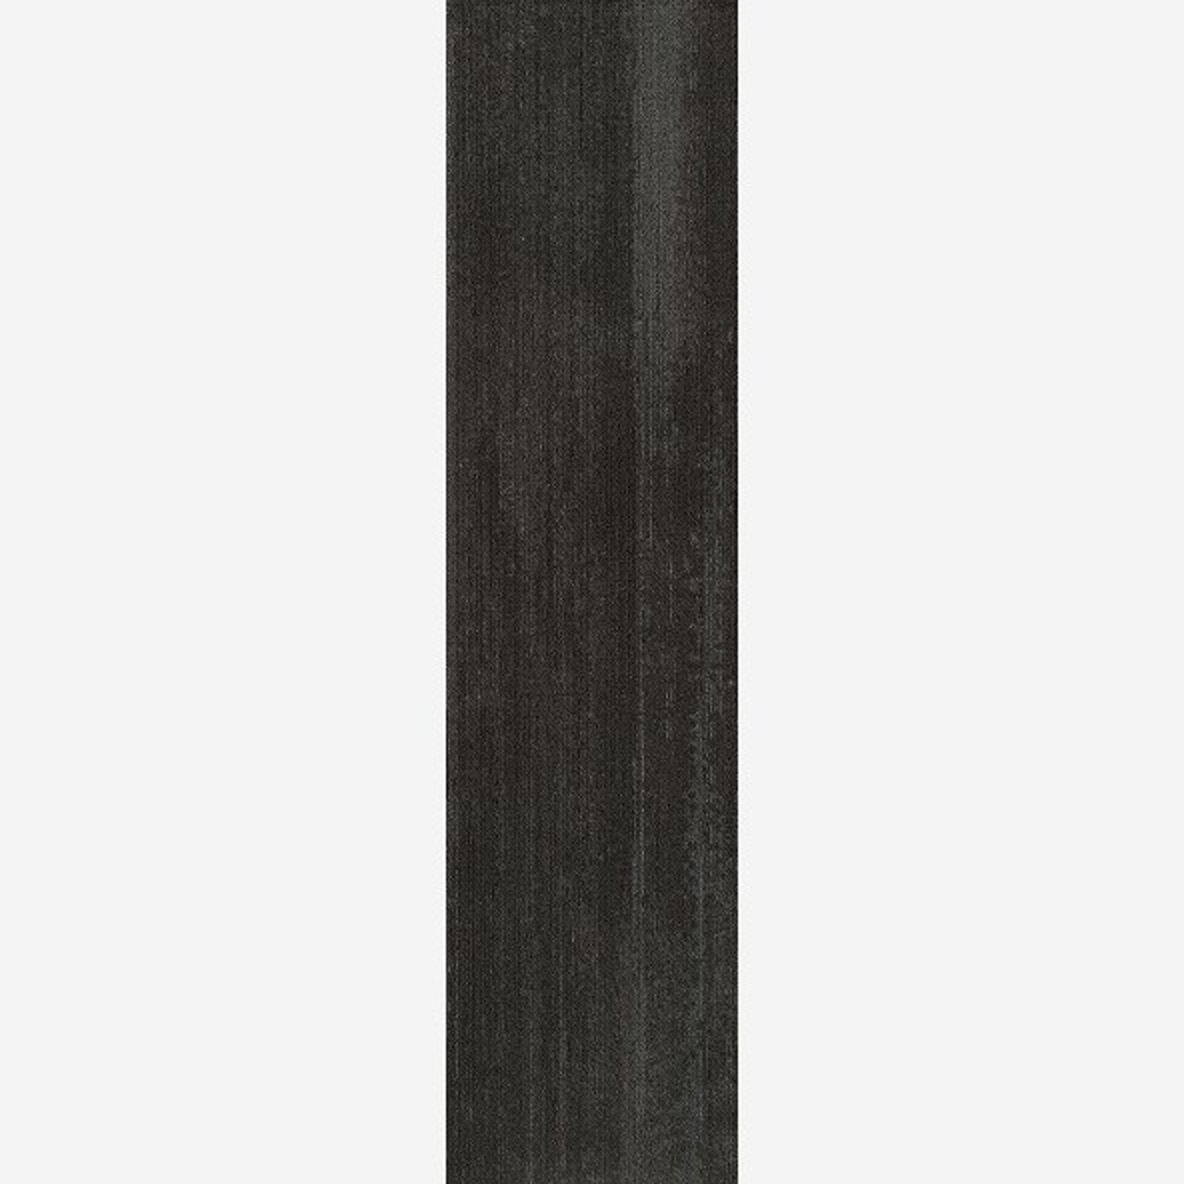 Ingrained Commercial Carpet Plank Neutral .28 Inch x 25 cm x 1 Meter Per Plank Charcoal Dark Full Tile